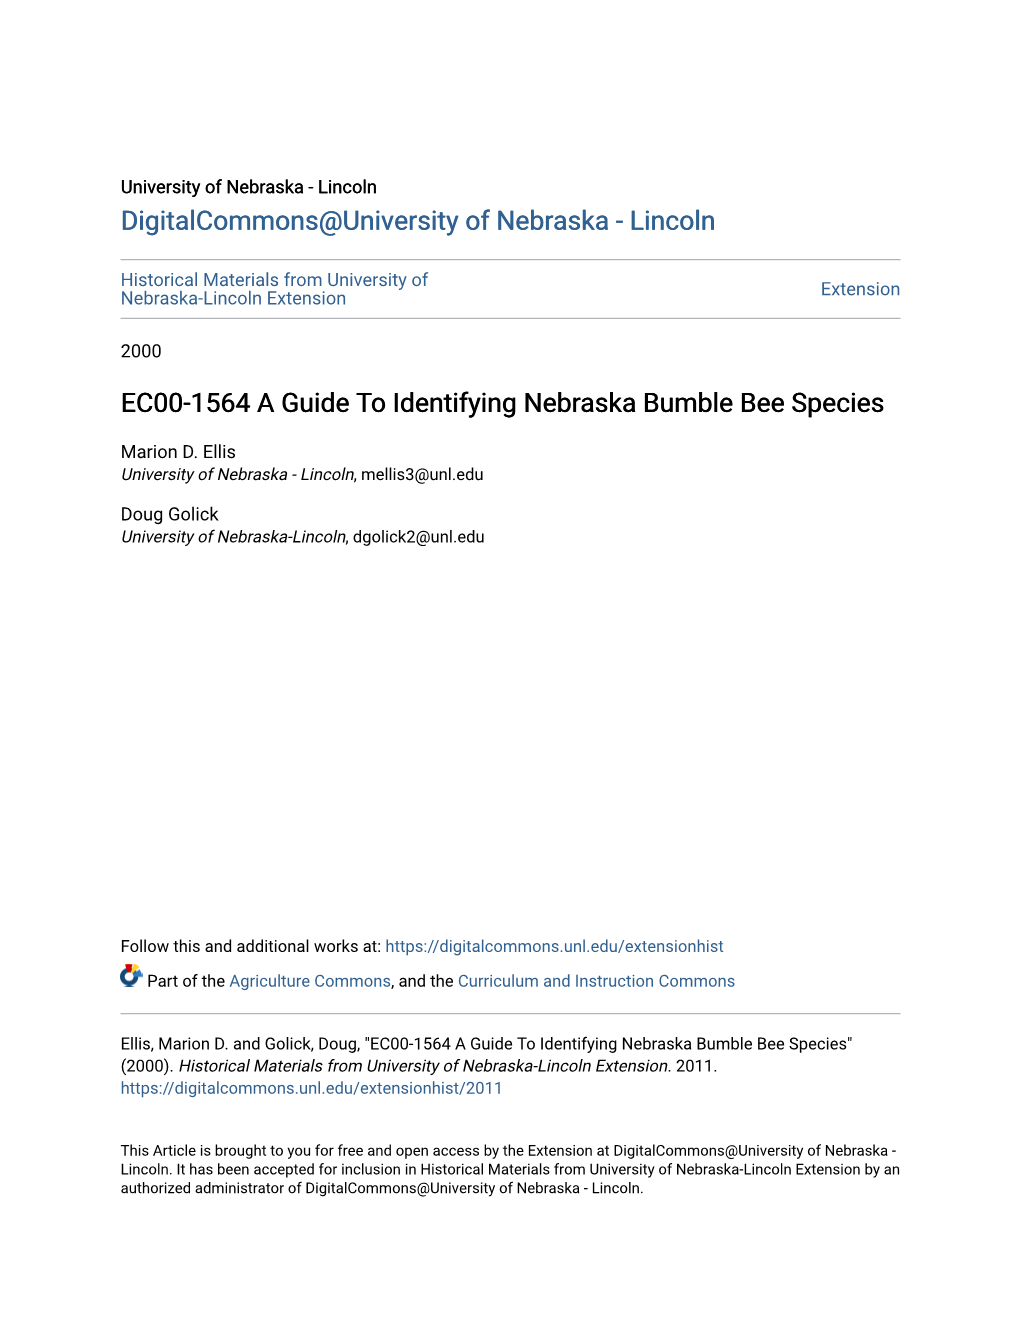 EC00-1564 a Guide to Identifying Nebraska Bumble Bee Species